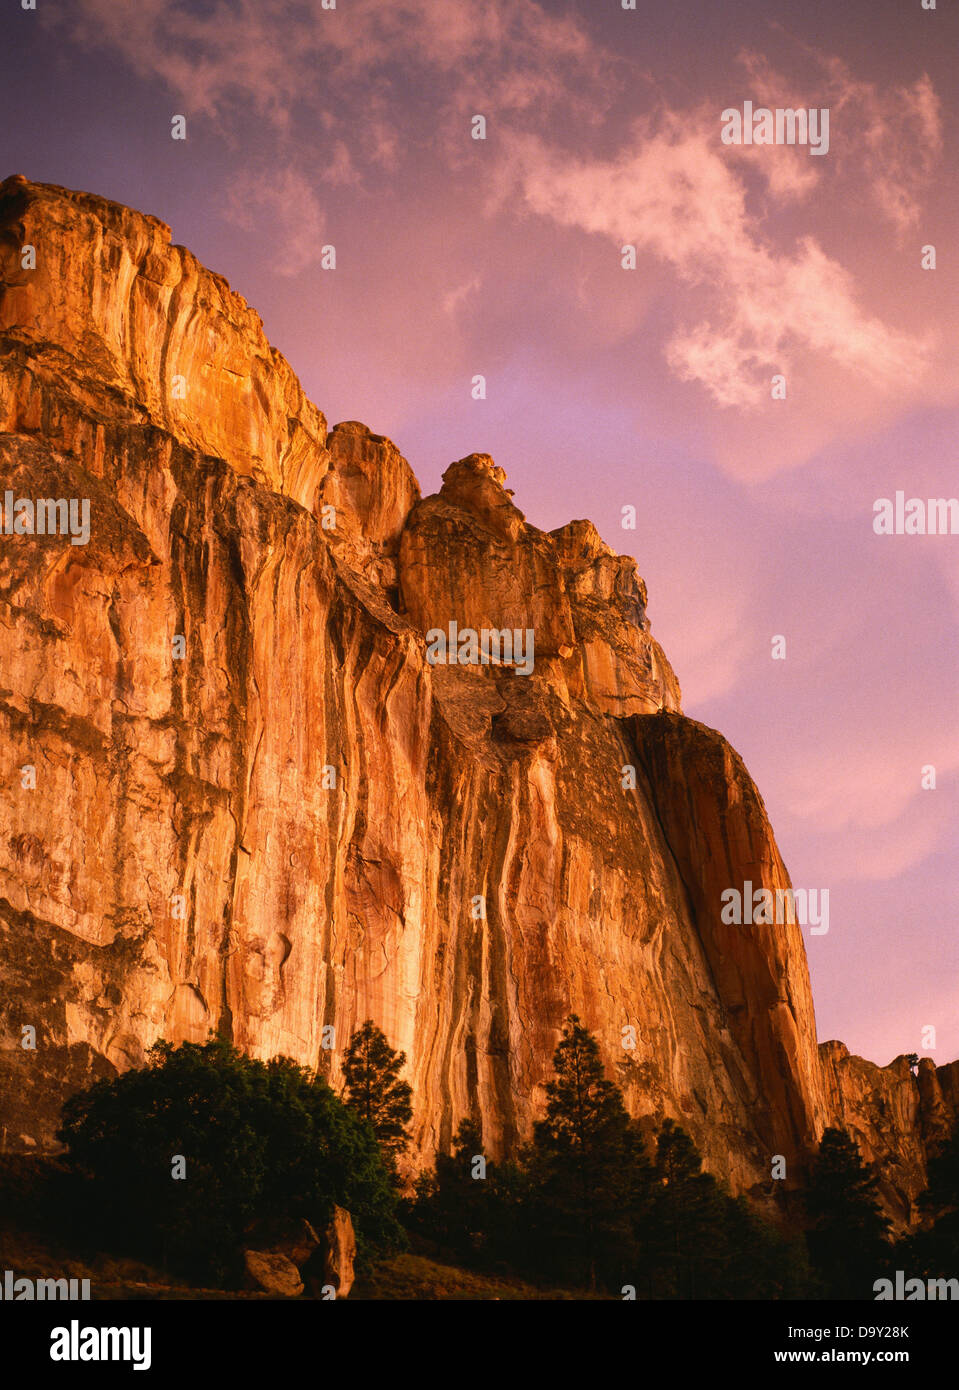 Storm light illuminating Inscription Rock, El Morro National Monument, New Mexico. Stock Photo